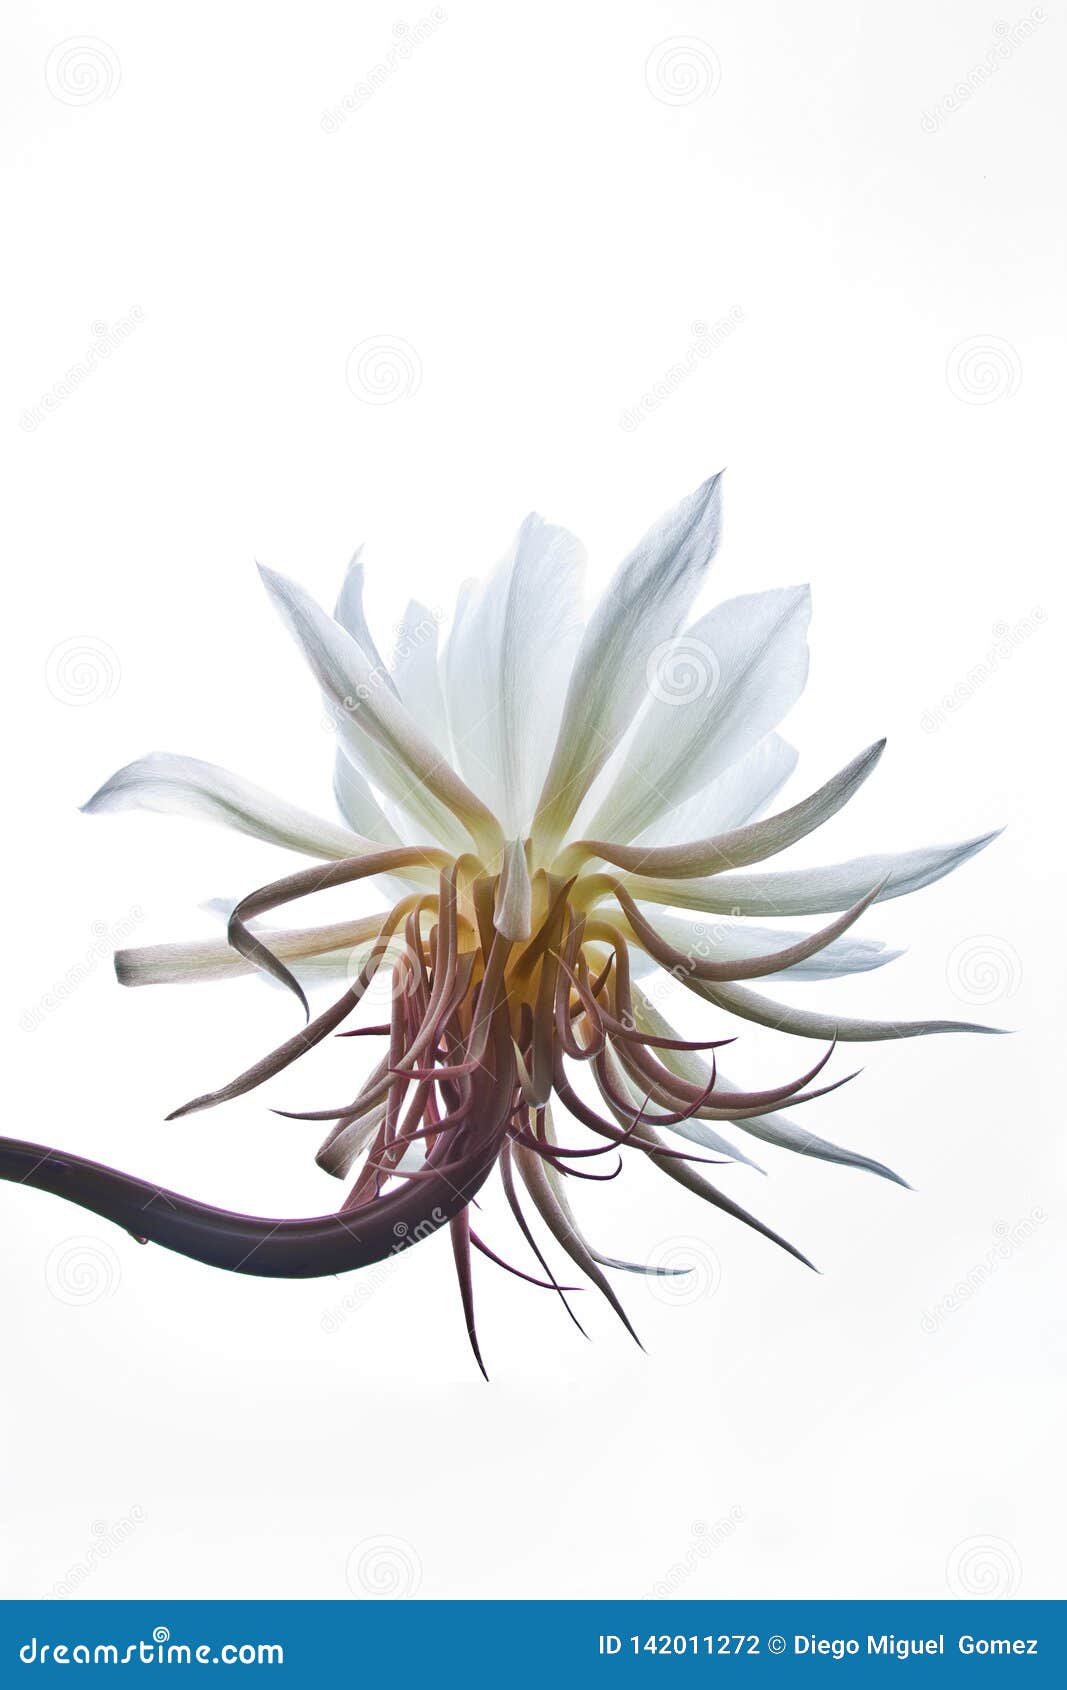  flower of epiphyllum oxipetalum or dama de noche